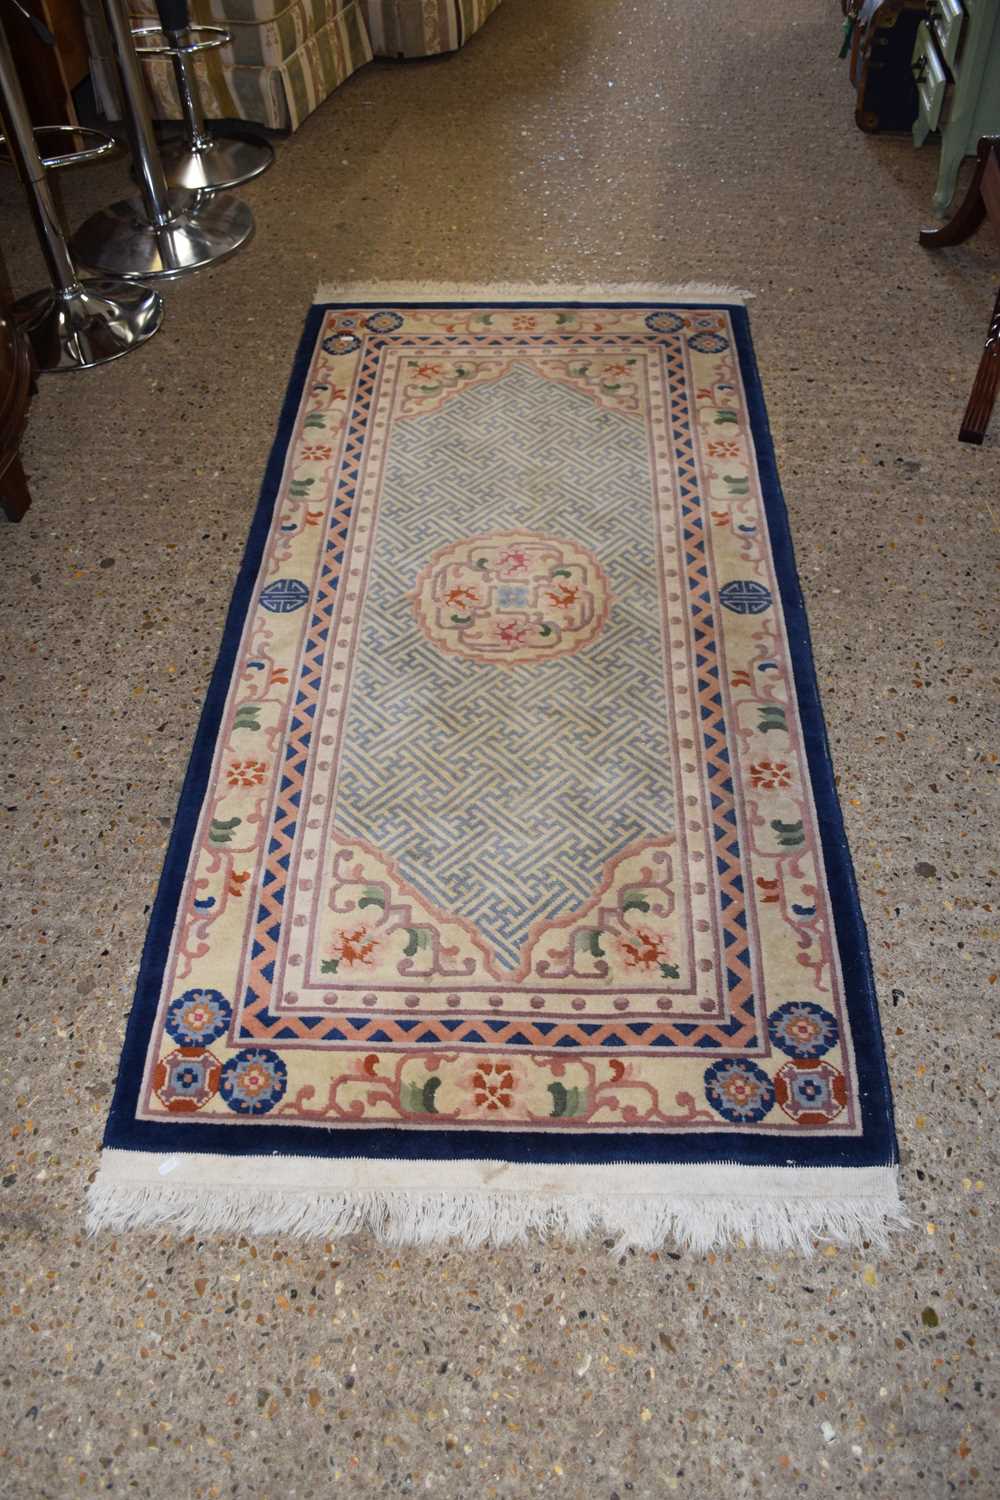 20th Century Chinese style floor rug